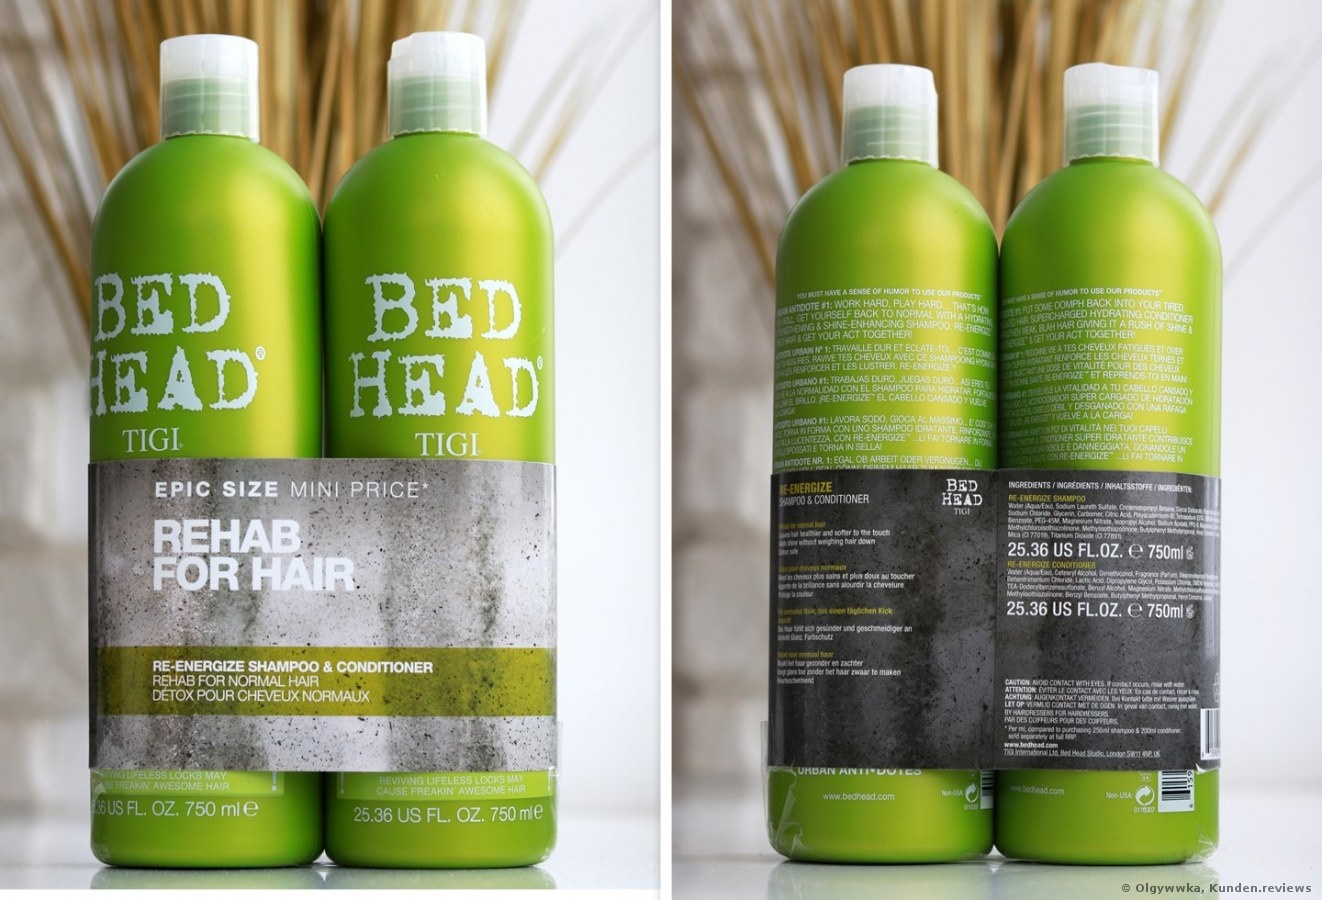 TIGI Bed Head Urban Antidotes Re-Energize Shampoo Review